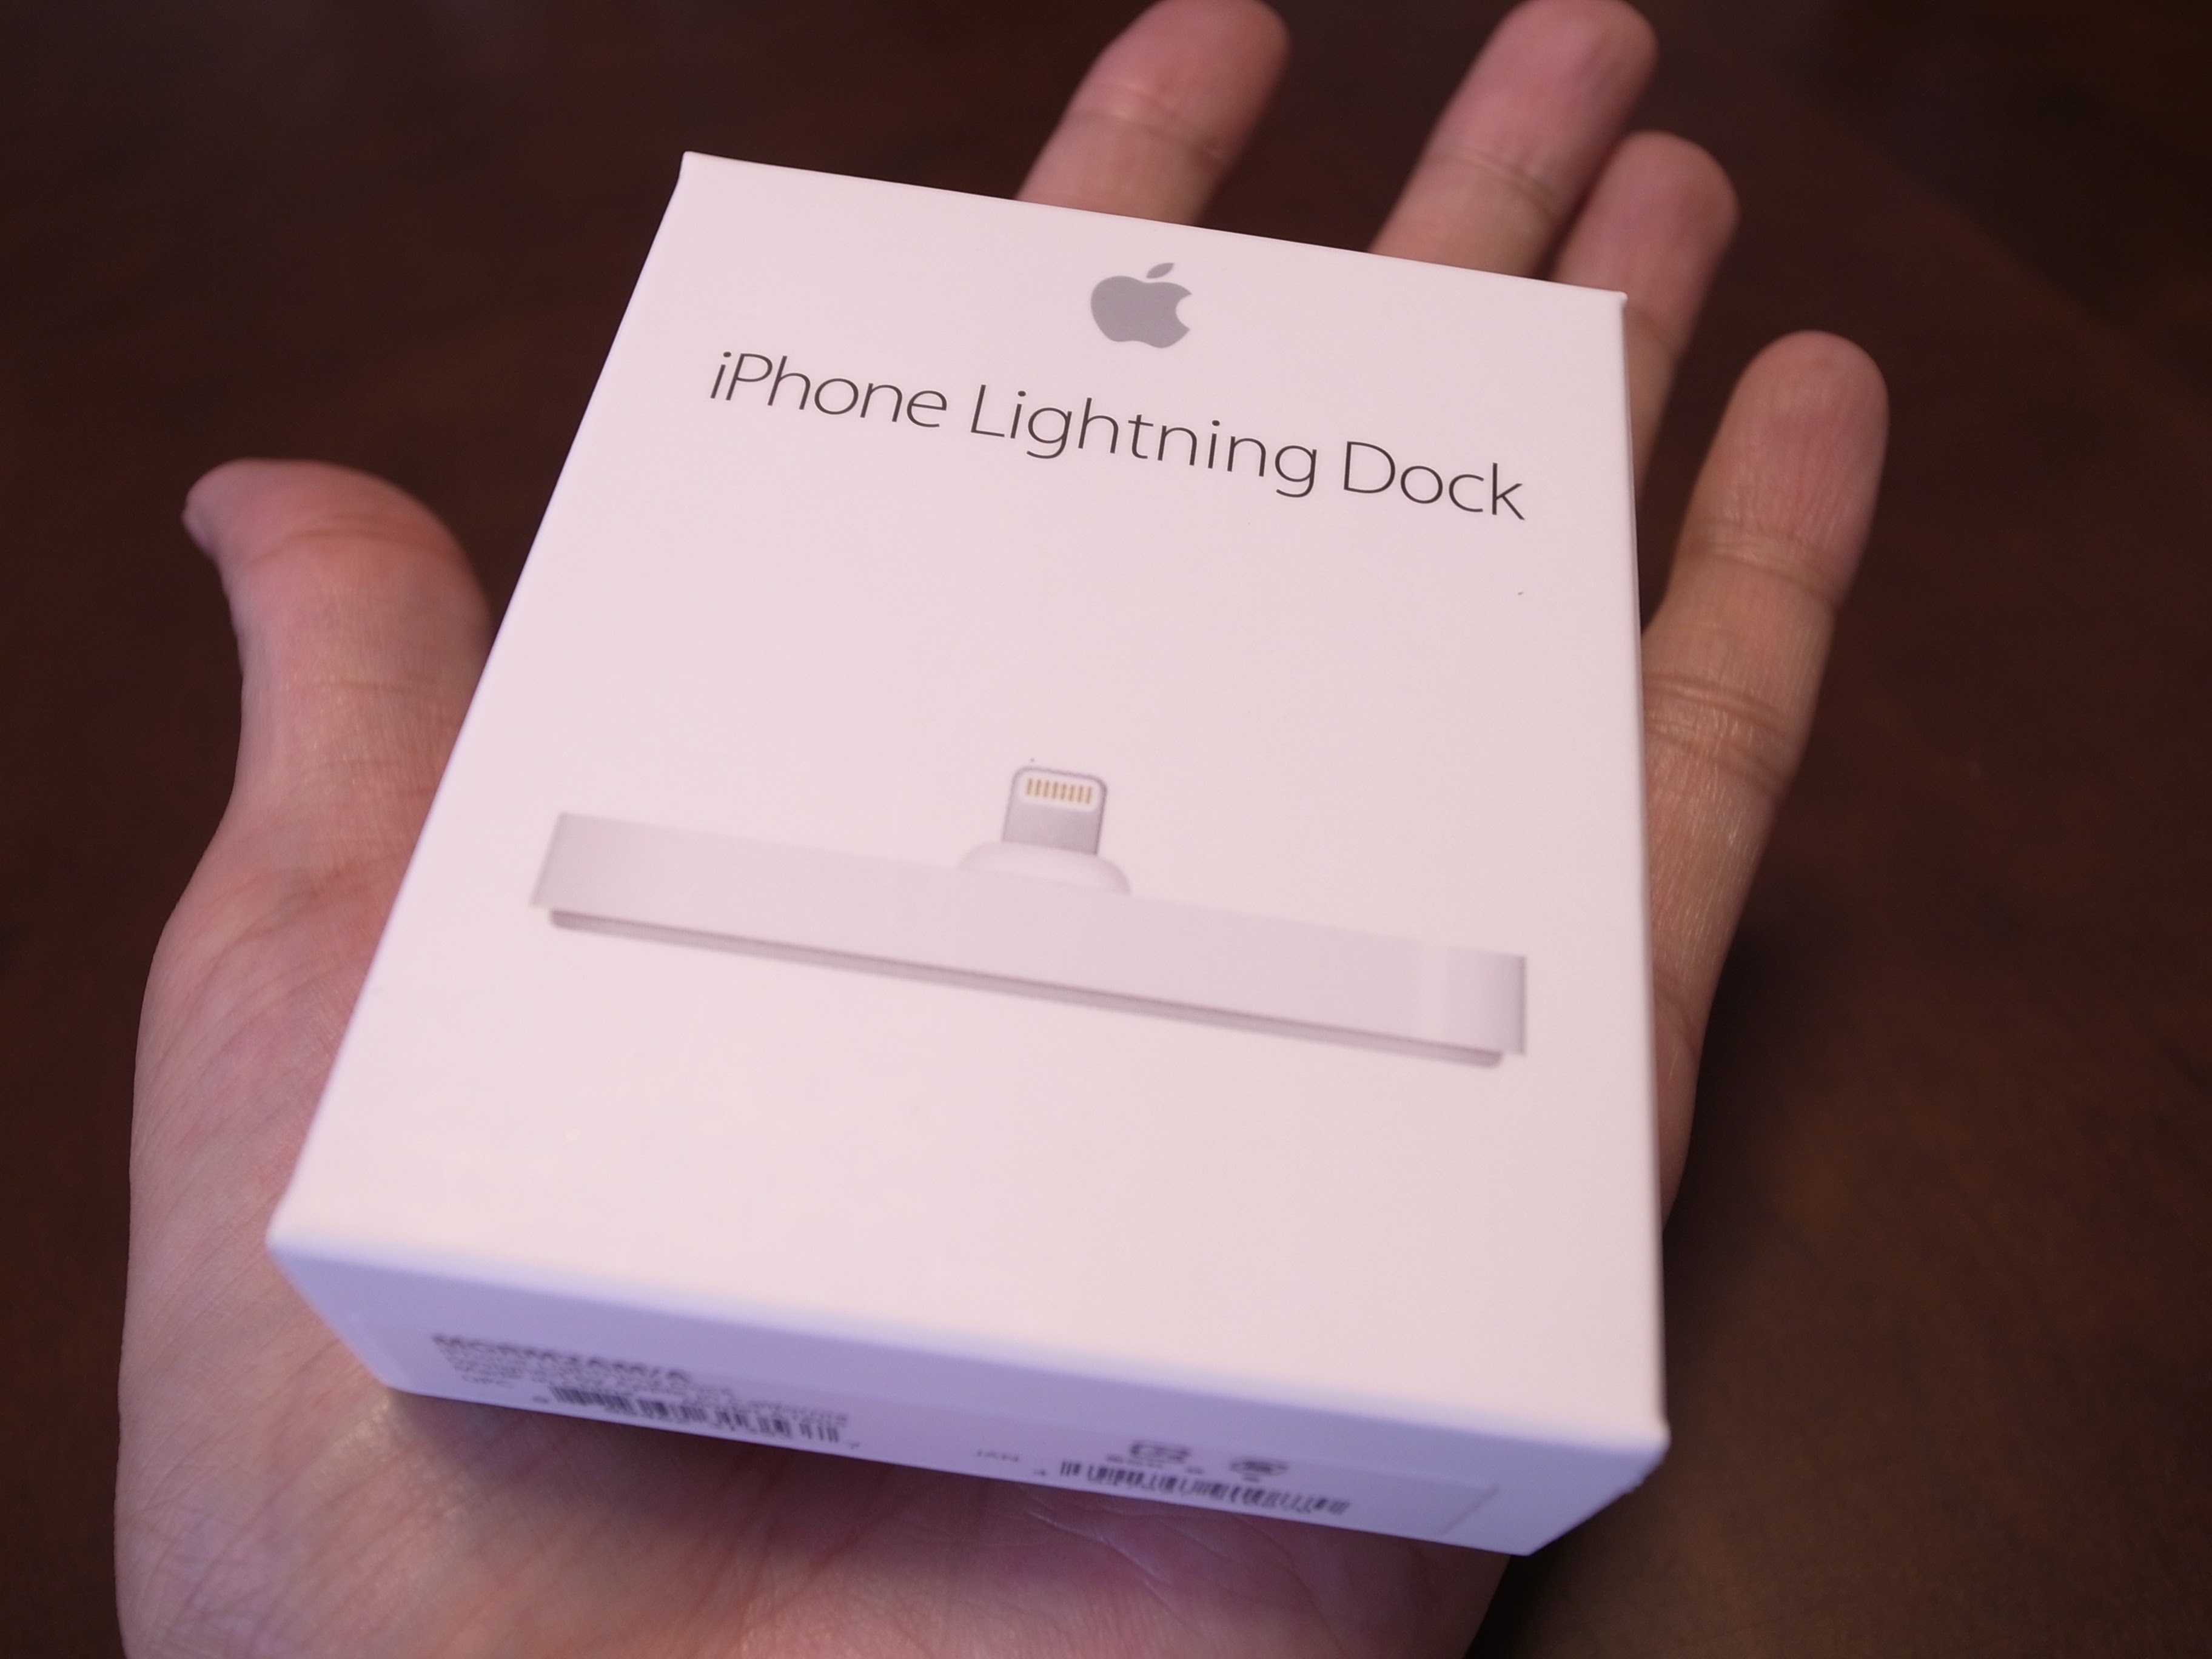 0818-201506_iPhone Lightning Dock 01